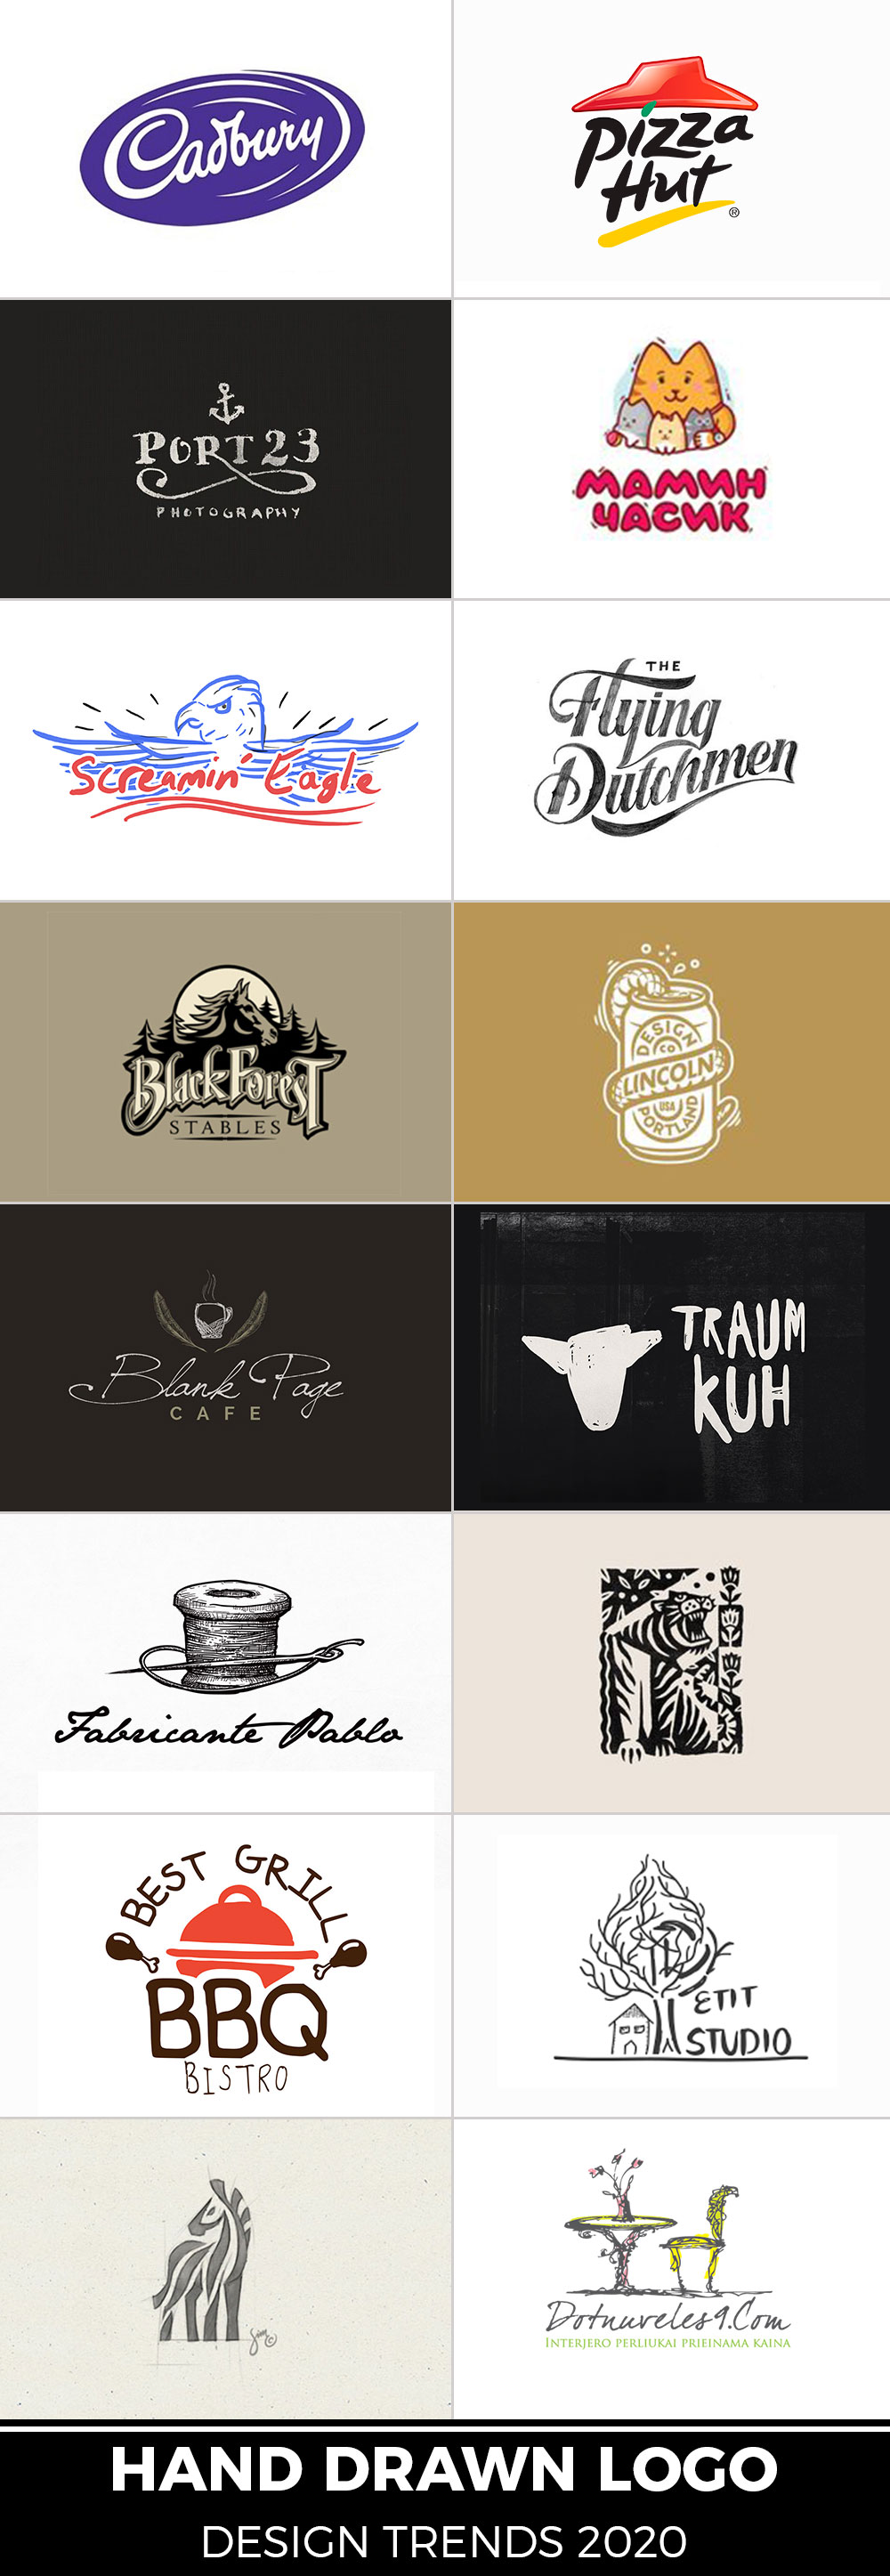 Creative Logo Design Trends Designerpeople